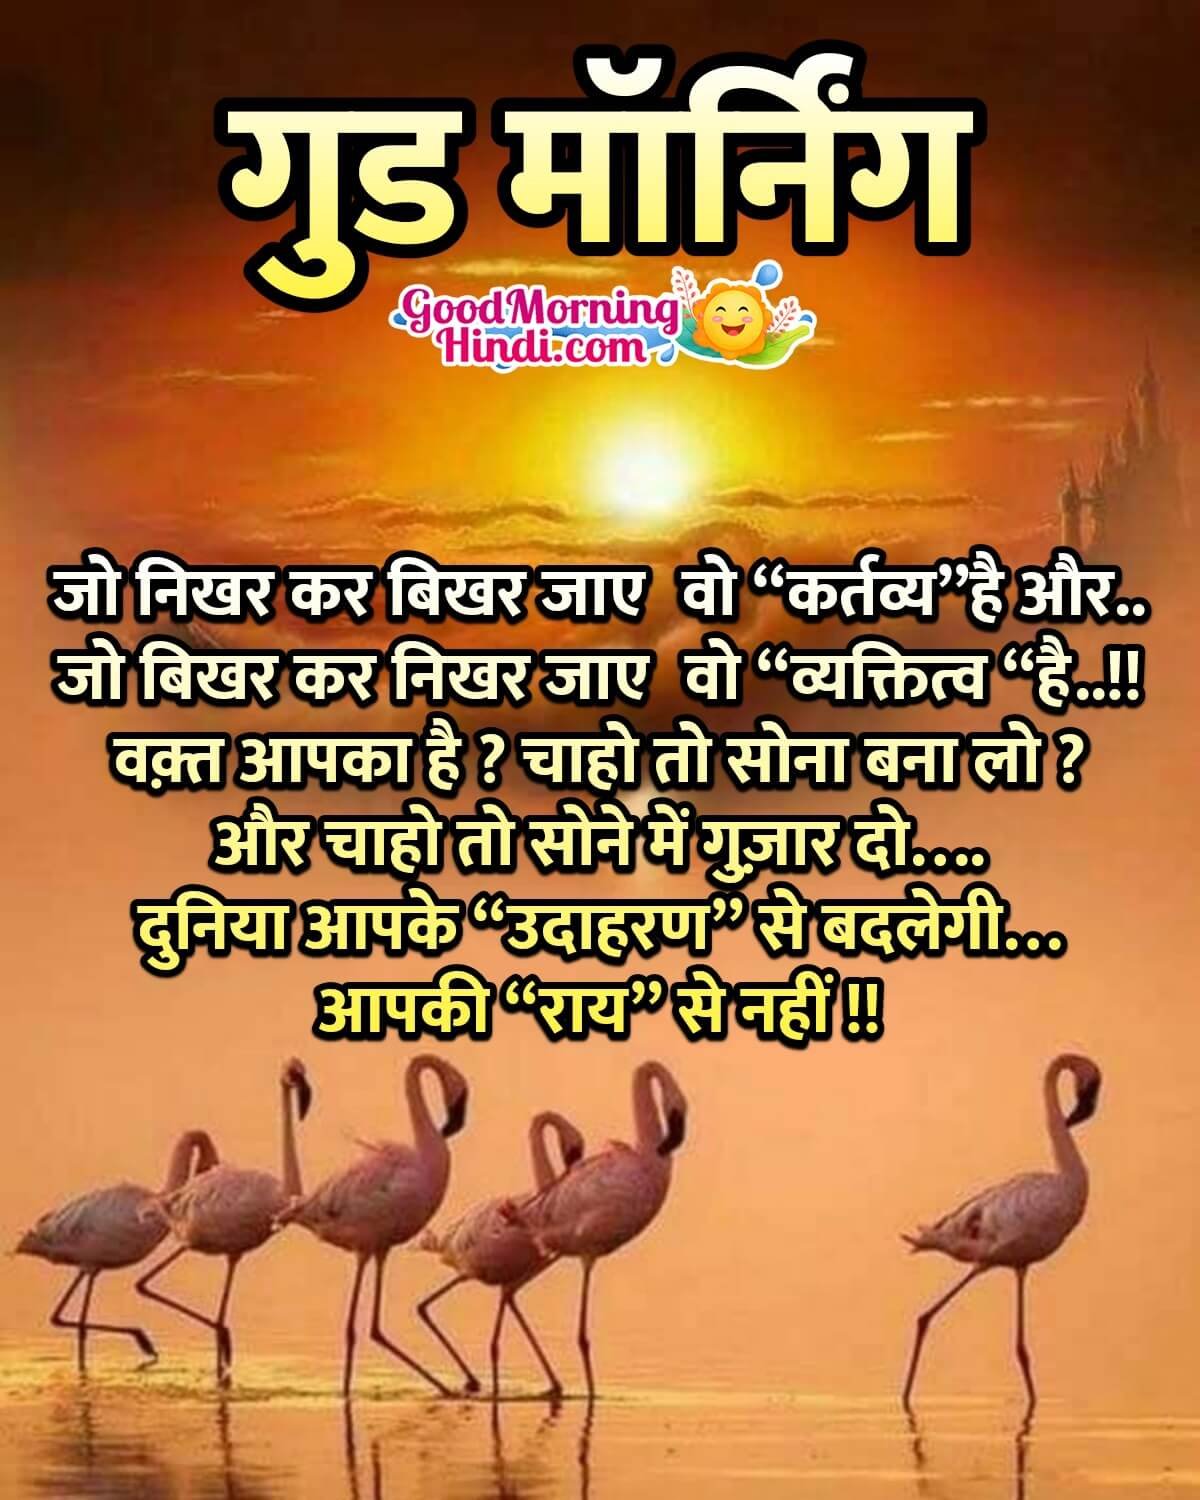 Good Morning Suvichar Image In Hindi